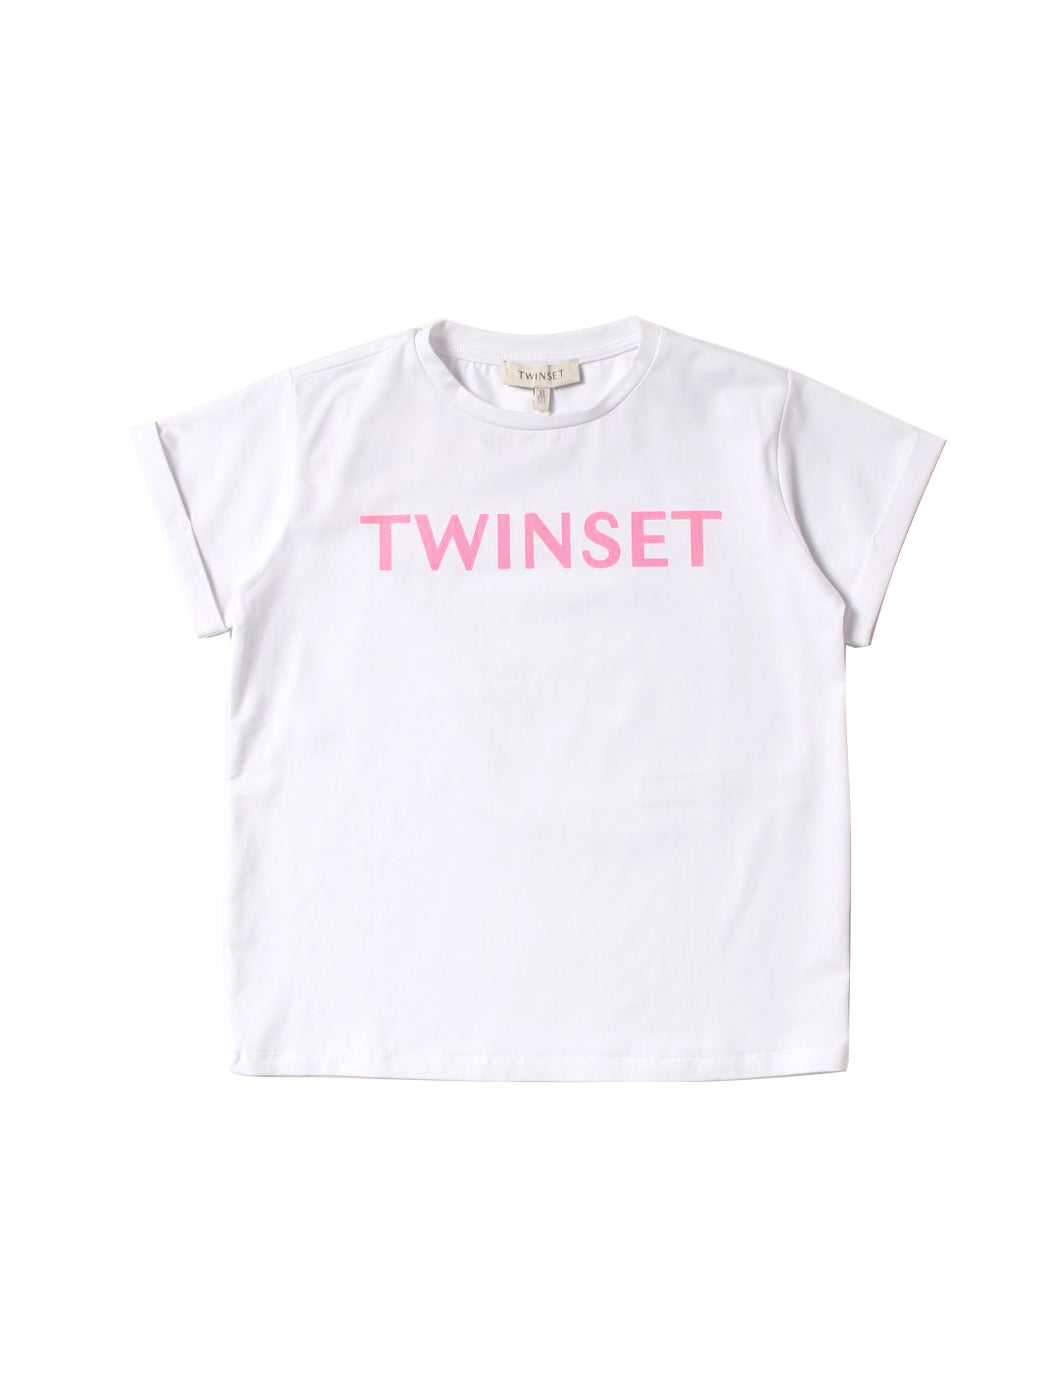 TWINSET Girl's T-Shirt print logo-221GJ2246